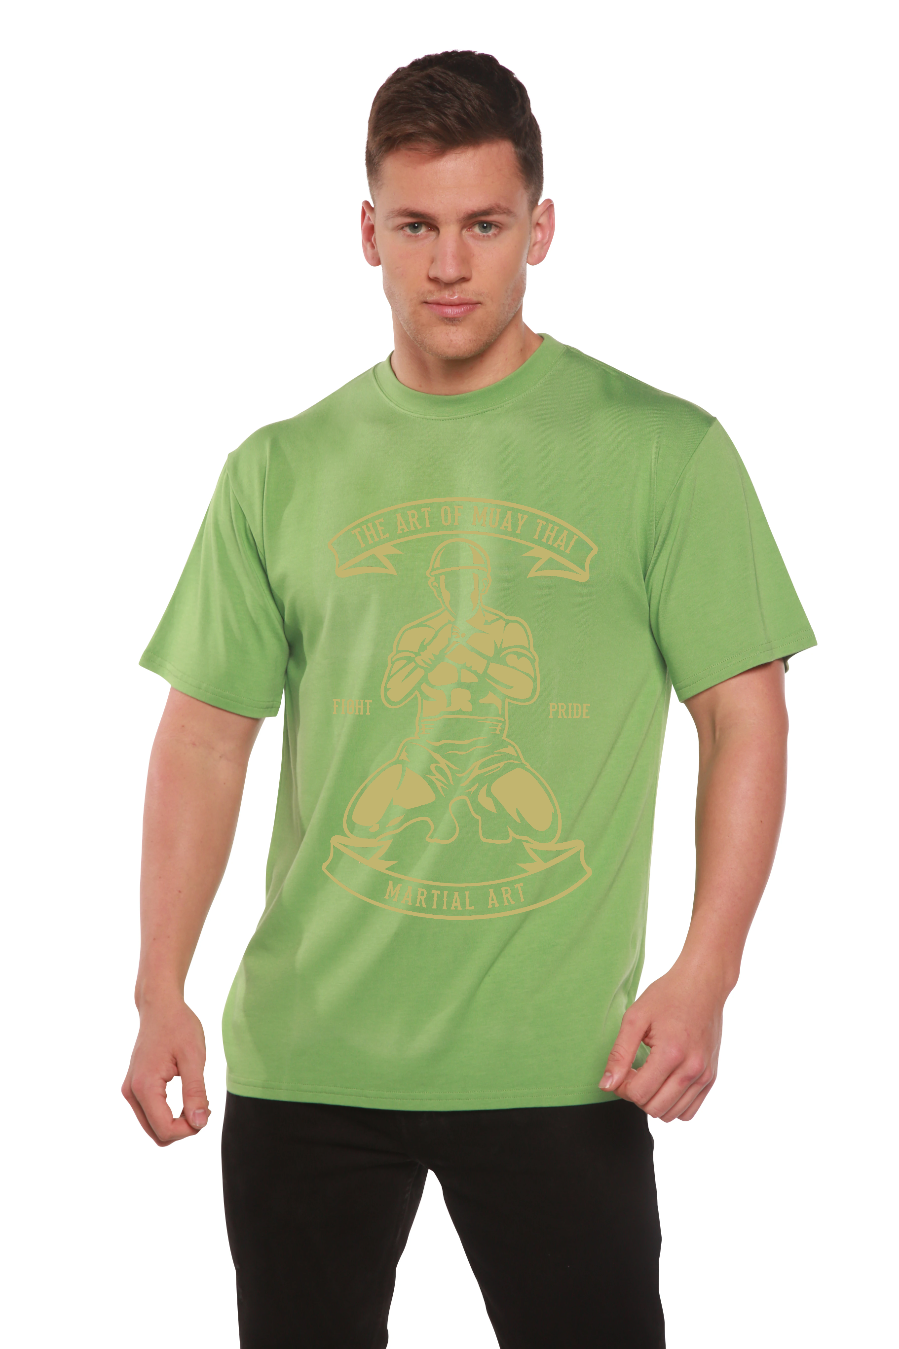 Martial Art Men's Bamboo Viscose/Organic Cotton Short Sleeve T-Shirt - Spun Bamboo